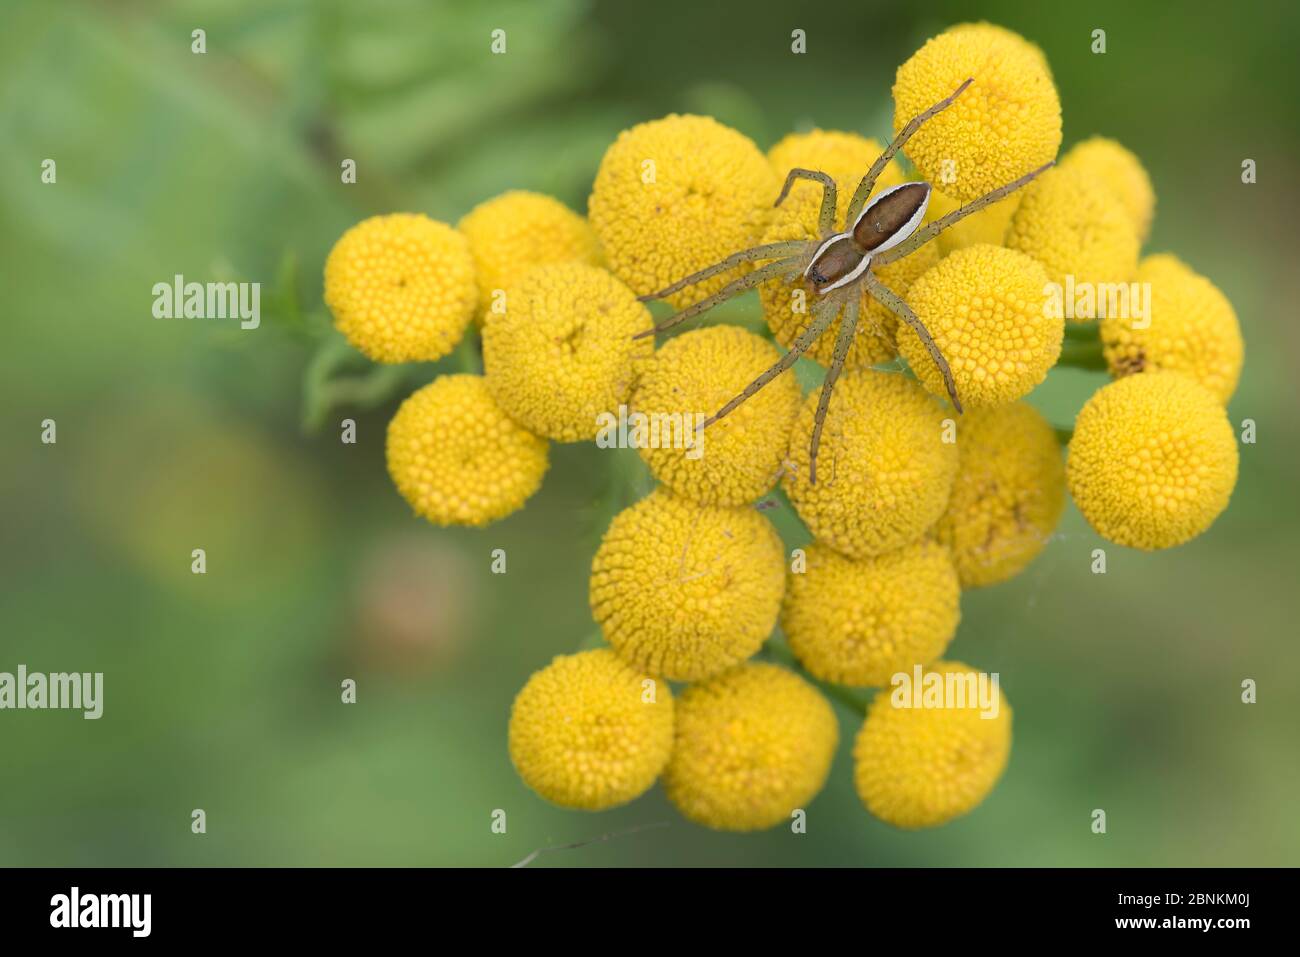 Raft spider (Dolomedes fimbriatus) on Tansy (Tanacetum vulgare), Klein Schietveld, Brasschaat, Belgium August Stock Photo